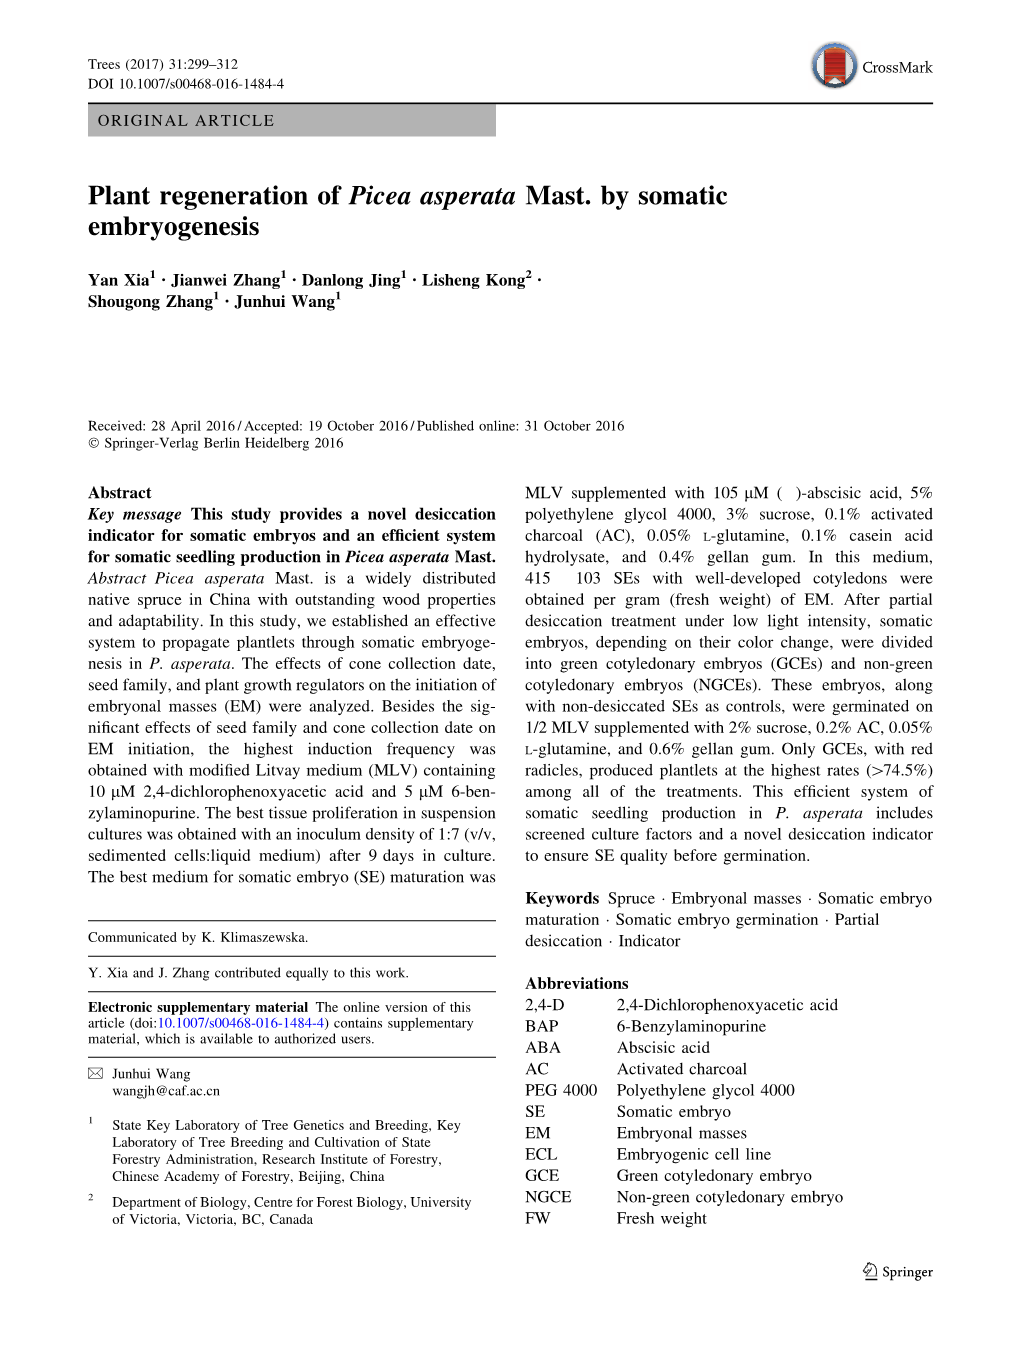 Plant Regeneration of Picea Asperata Mast. by Somatic Embryogenesis